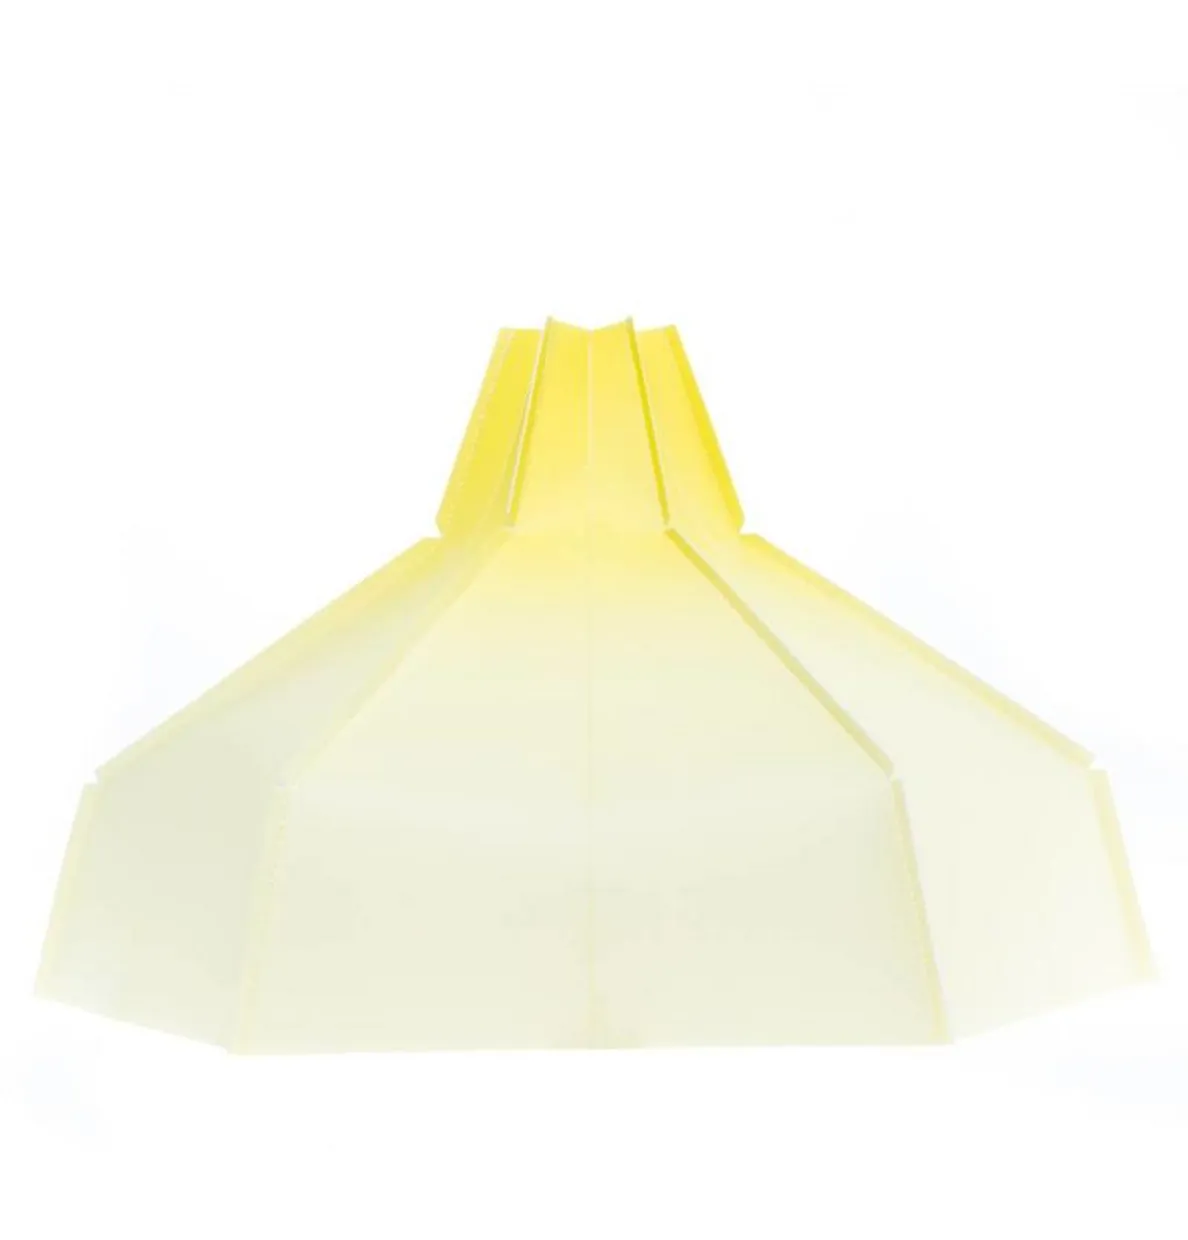 Paper lamp shade Yellow gradient